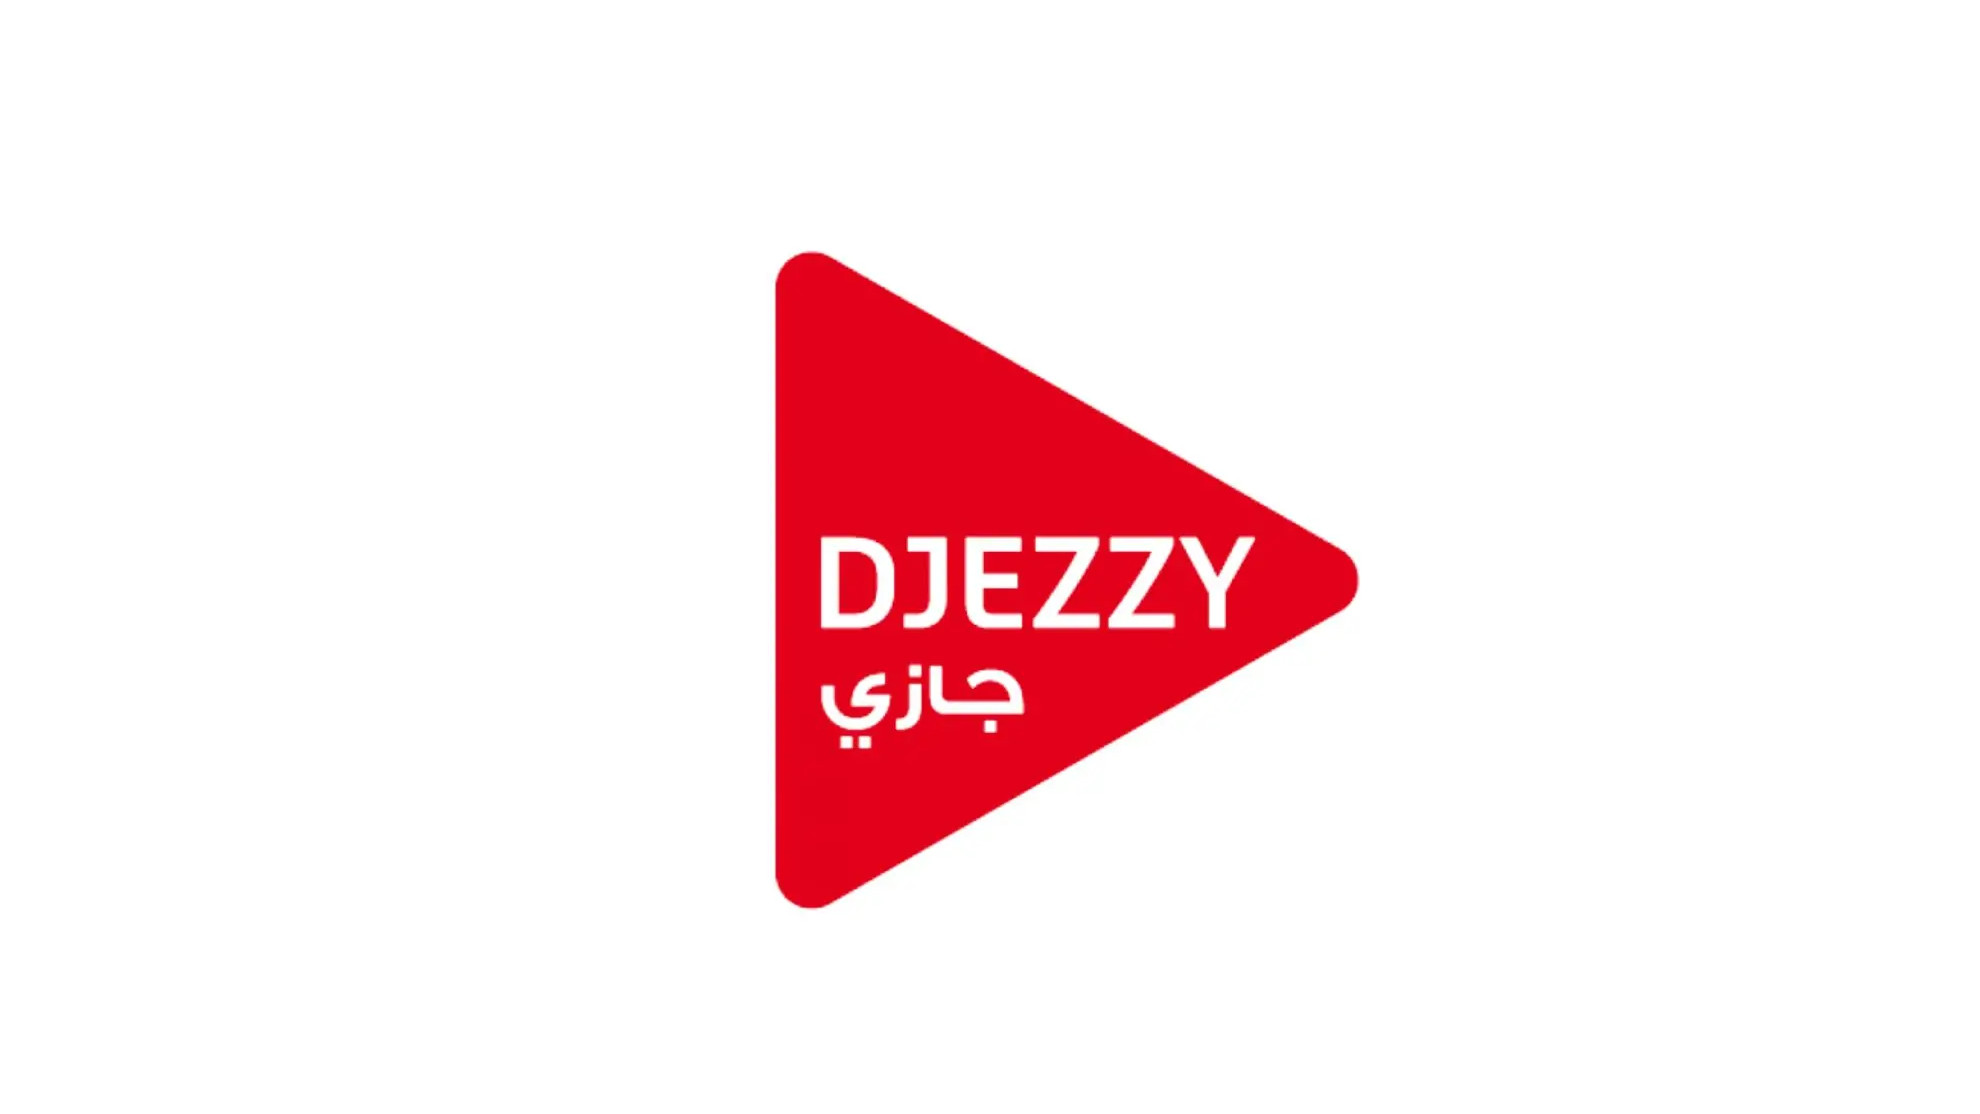 Djezzy 100 DZD Mobile Top-up DZ [$ 1.36]